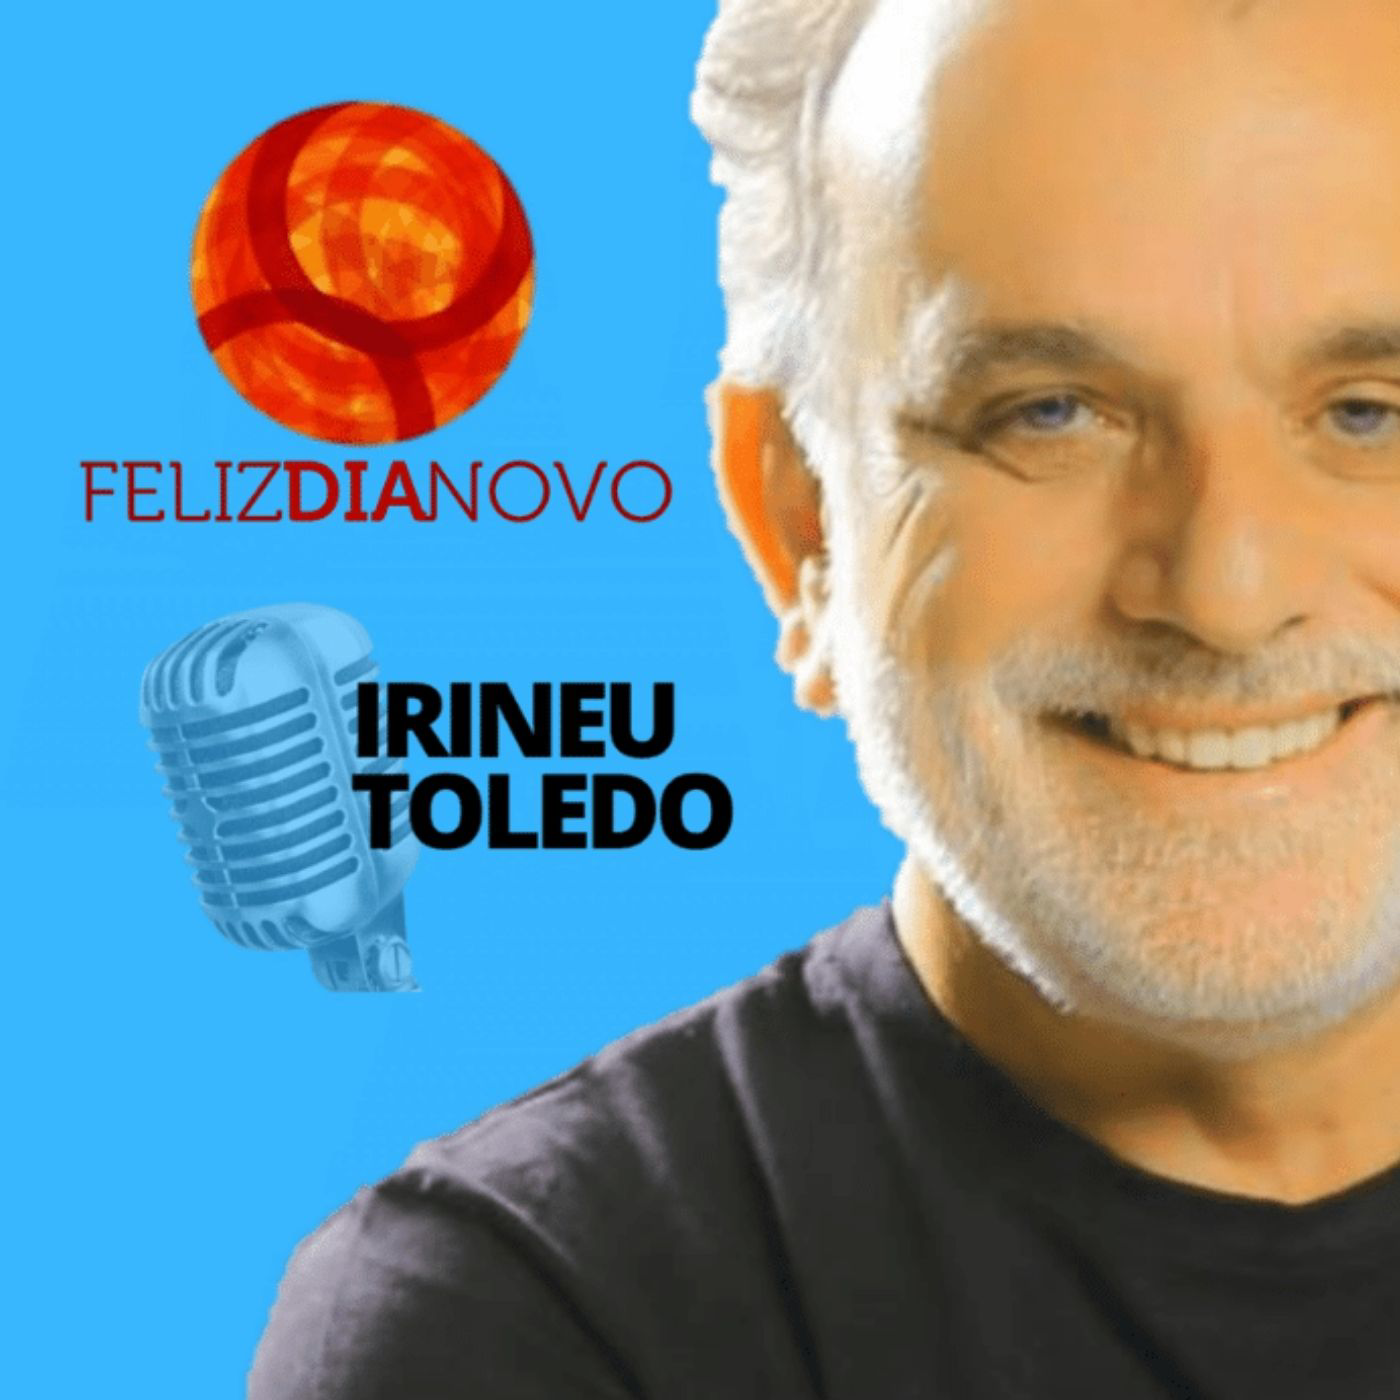 A highlight from DILOGO NUTRITIVO com Dominic de Souza  Vencer 360 equilibrando a vida